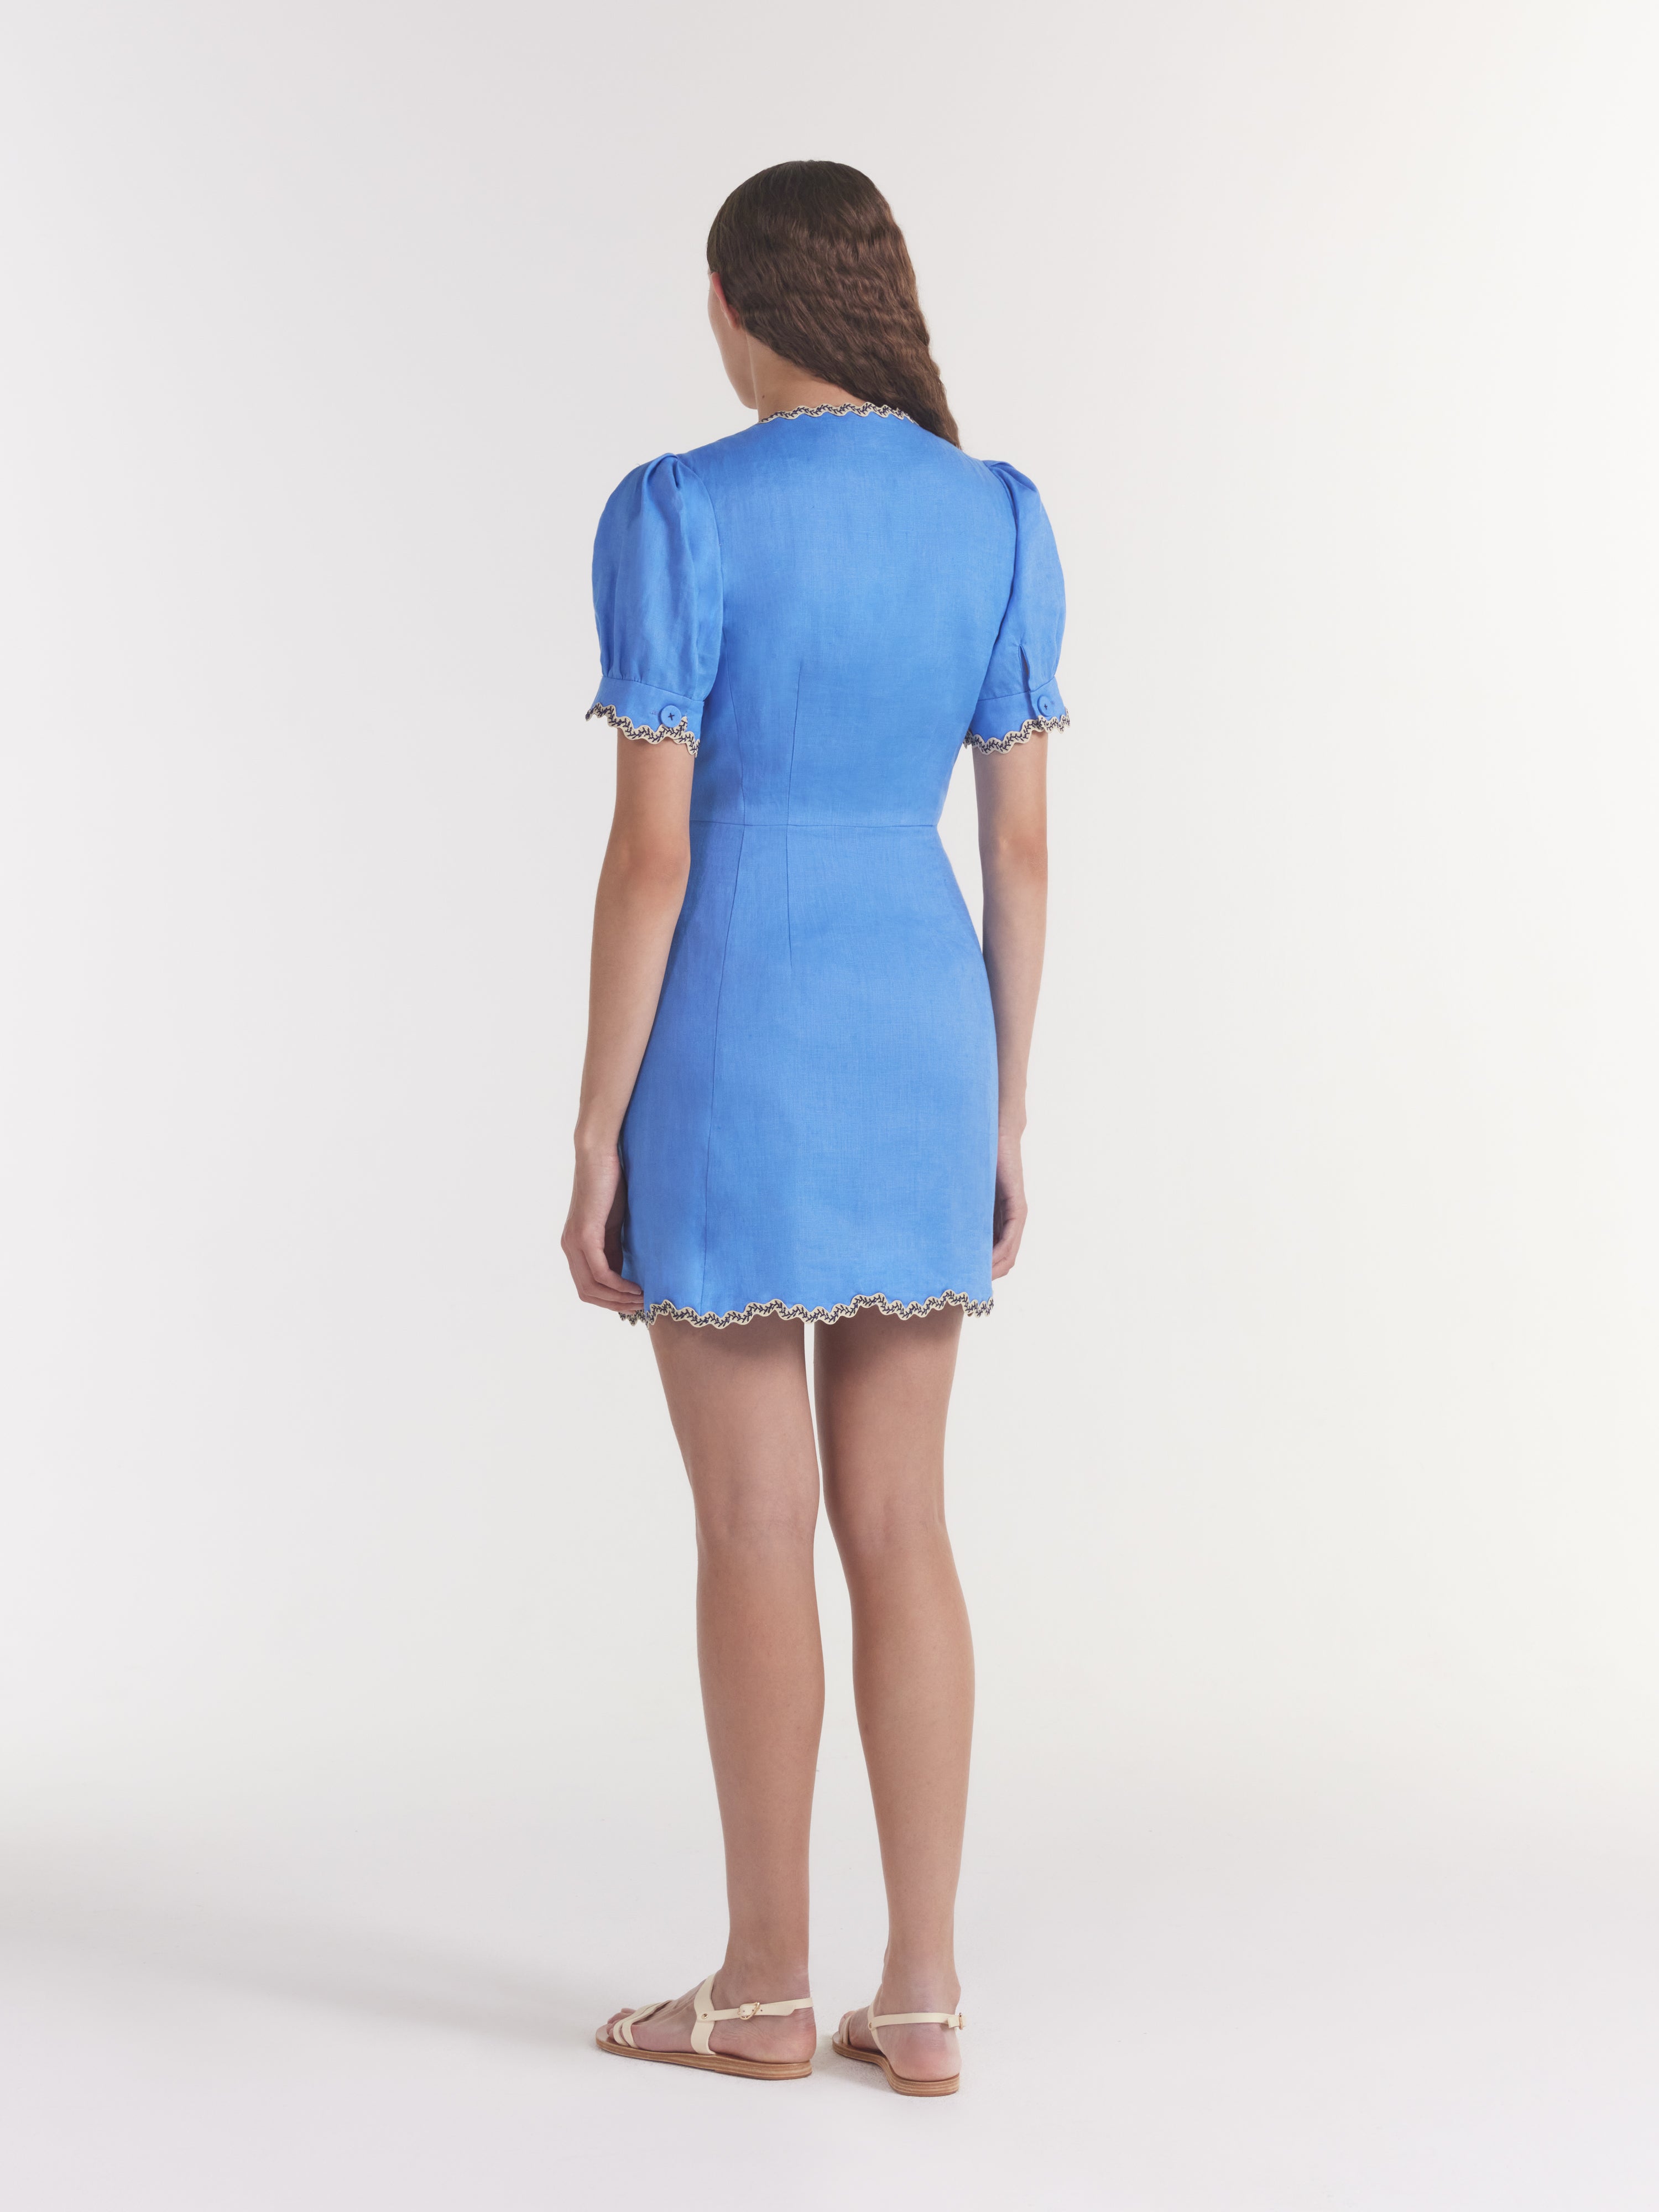 Marlee Dress in Peri Blue